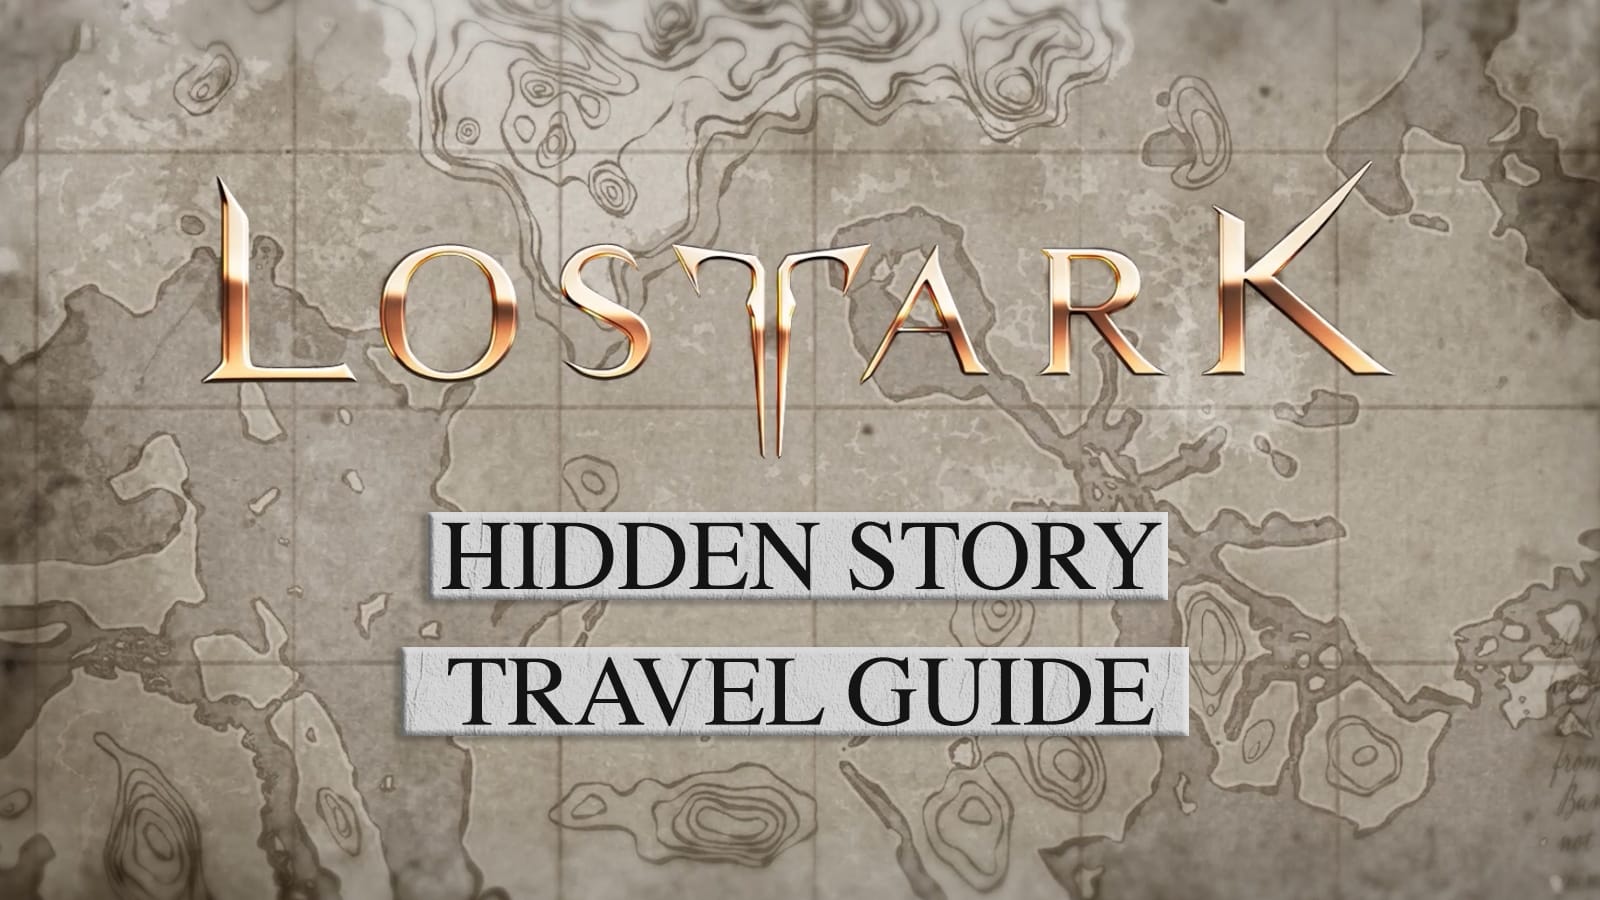 lost ark hidden story travel guide feature image dexerto